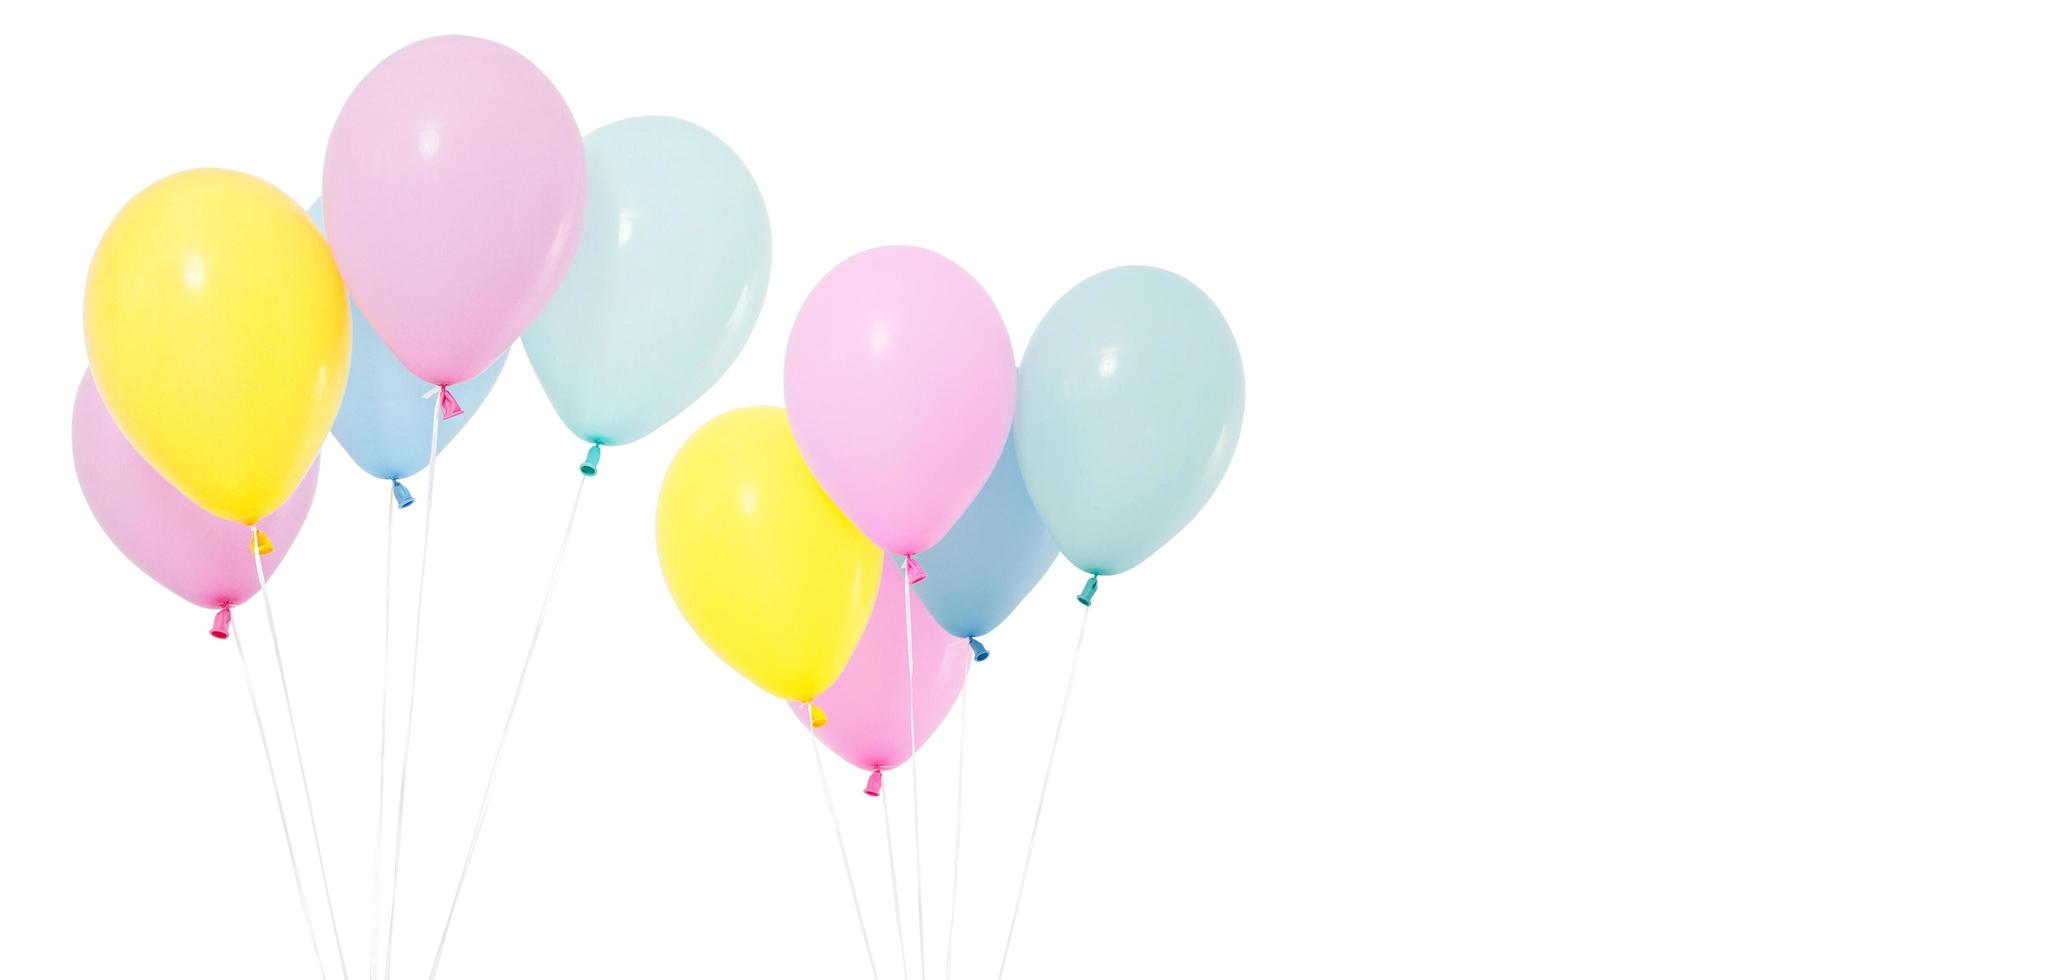 vliegende gekleurde ballon op witte achtergrond geïsoleerd foto